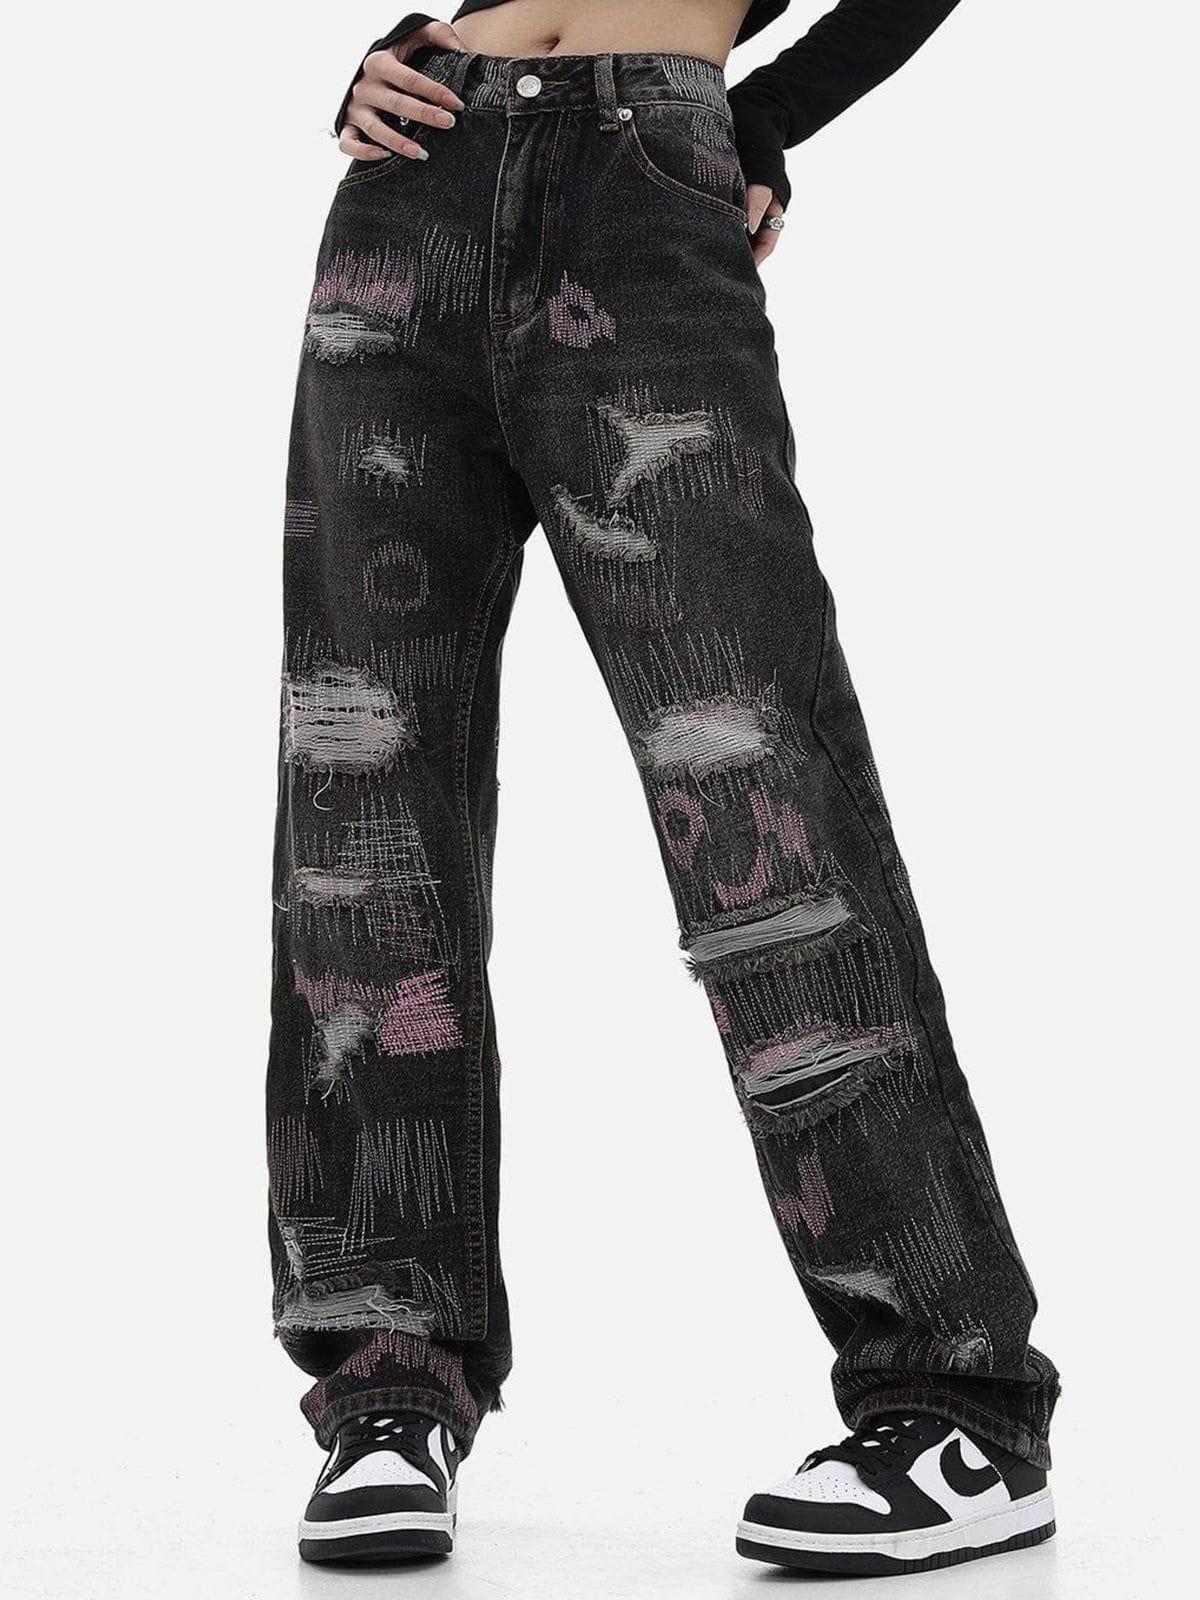 Eprezzy® - Graffiti Embroidered Ripped Jeans Streetwear Fashion - eprezzy.com